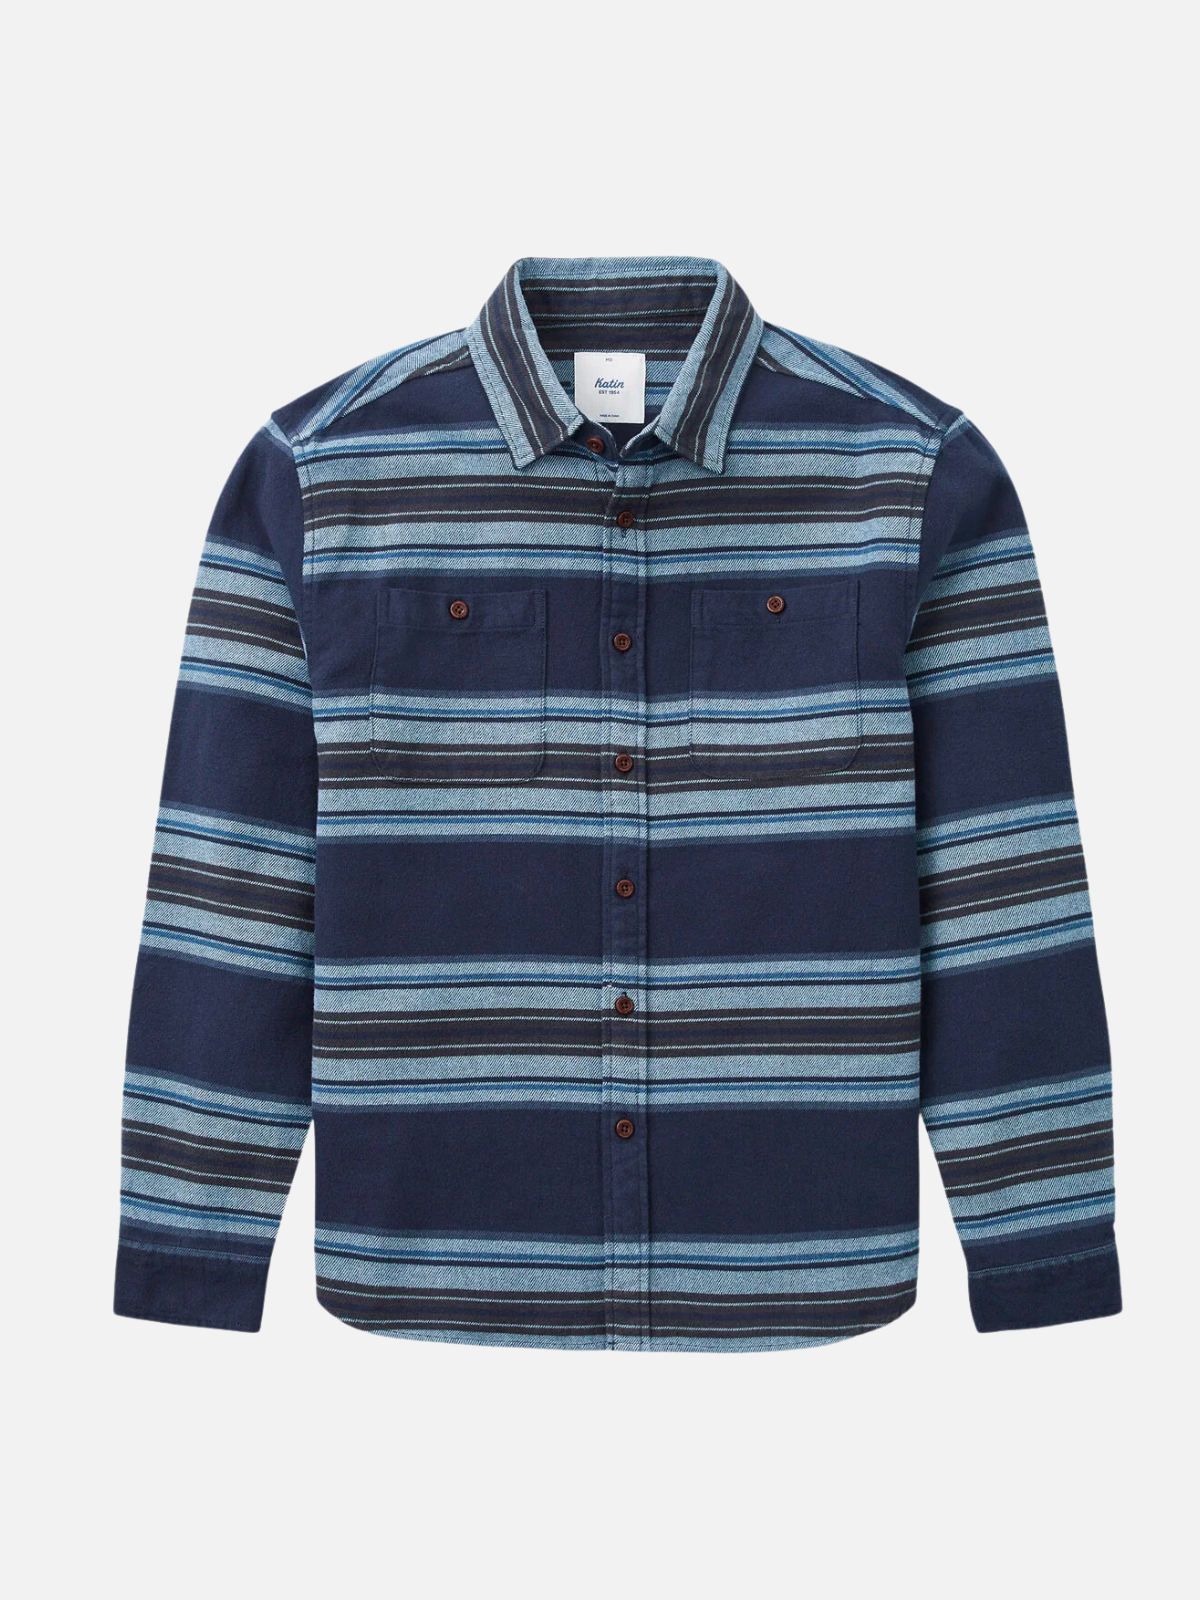 katin sierra flannel polar navy horizontal stripe button down shirt blue black grey kempt athens ga georgia men's clothing store